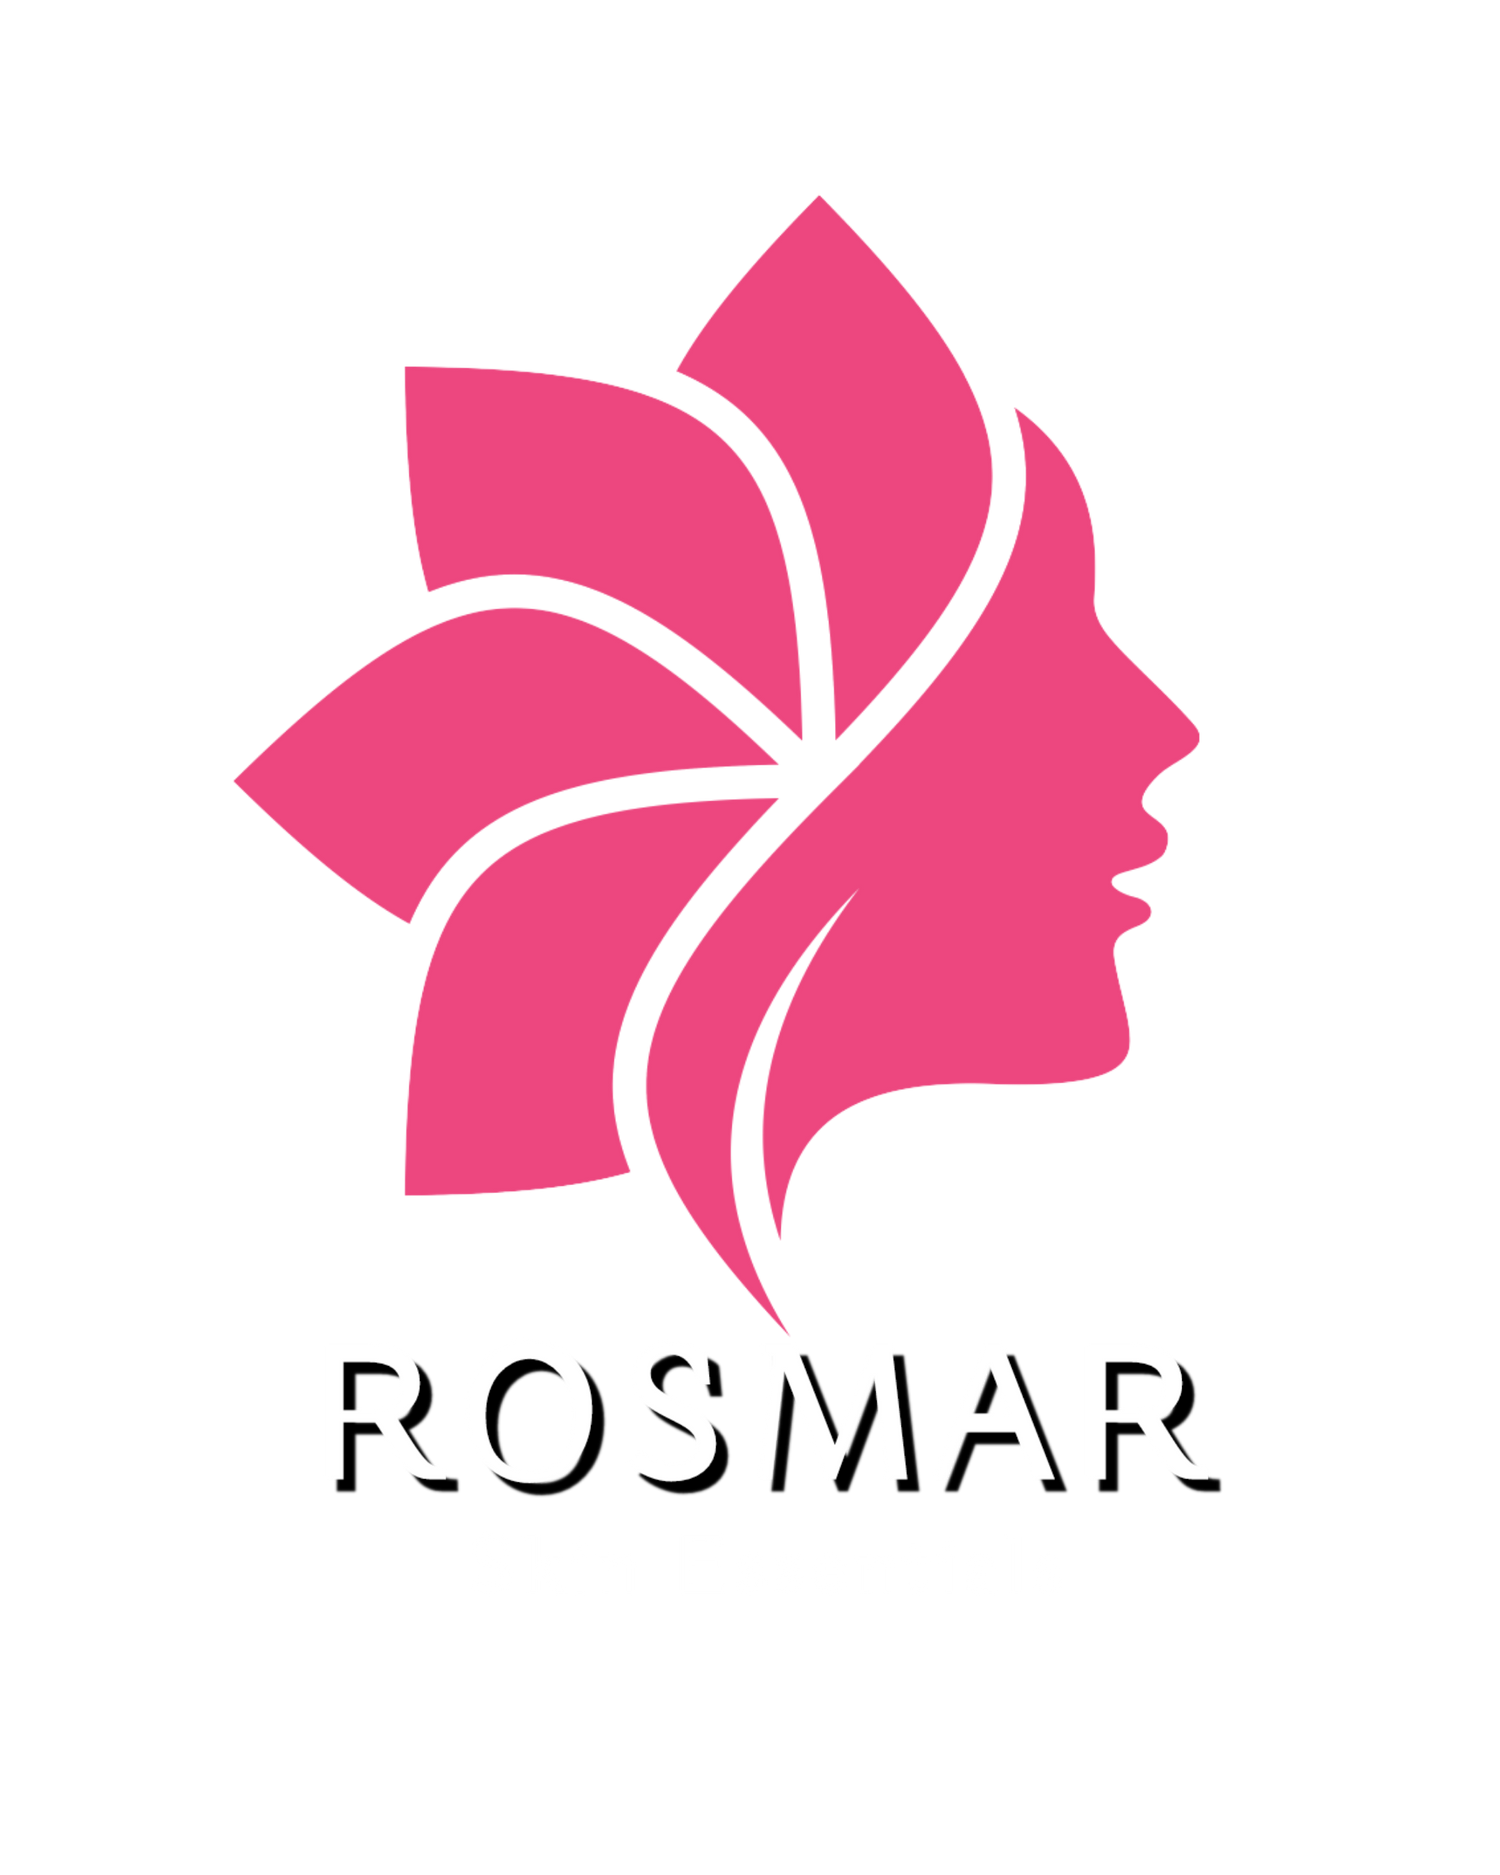 Rosmar Skin Care Essentials - True Beauty Skin Essentials